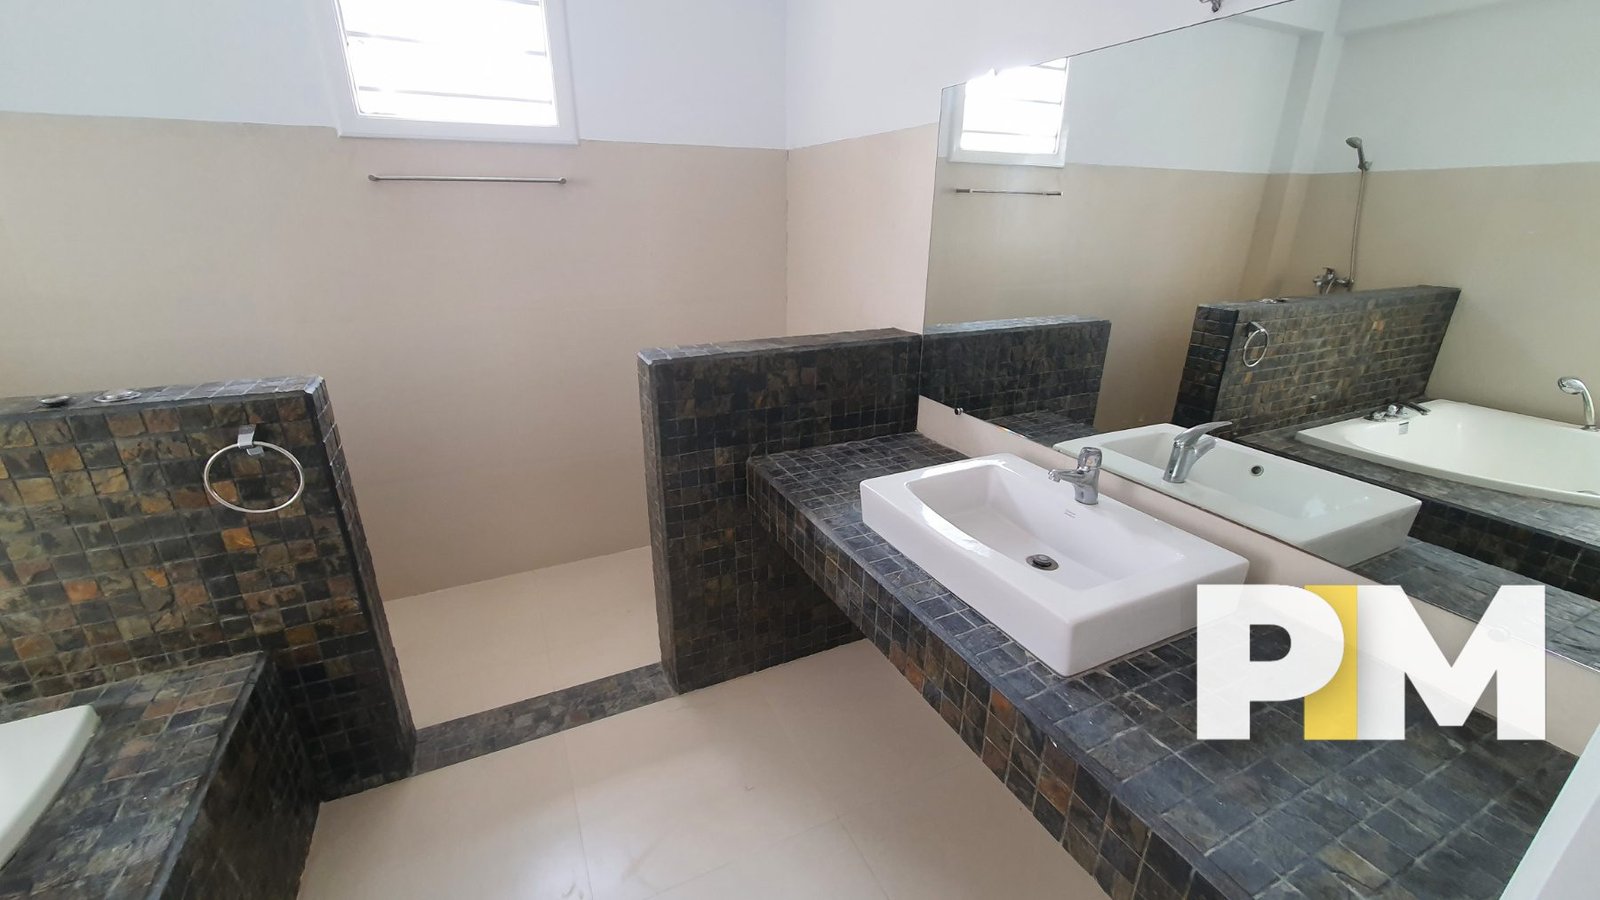 Bathroom with sink - Yangon Real Estate